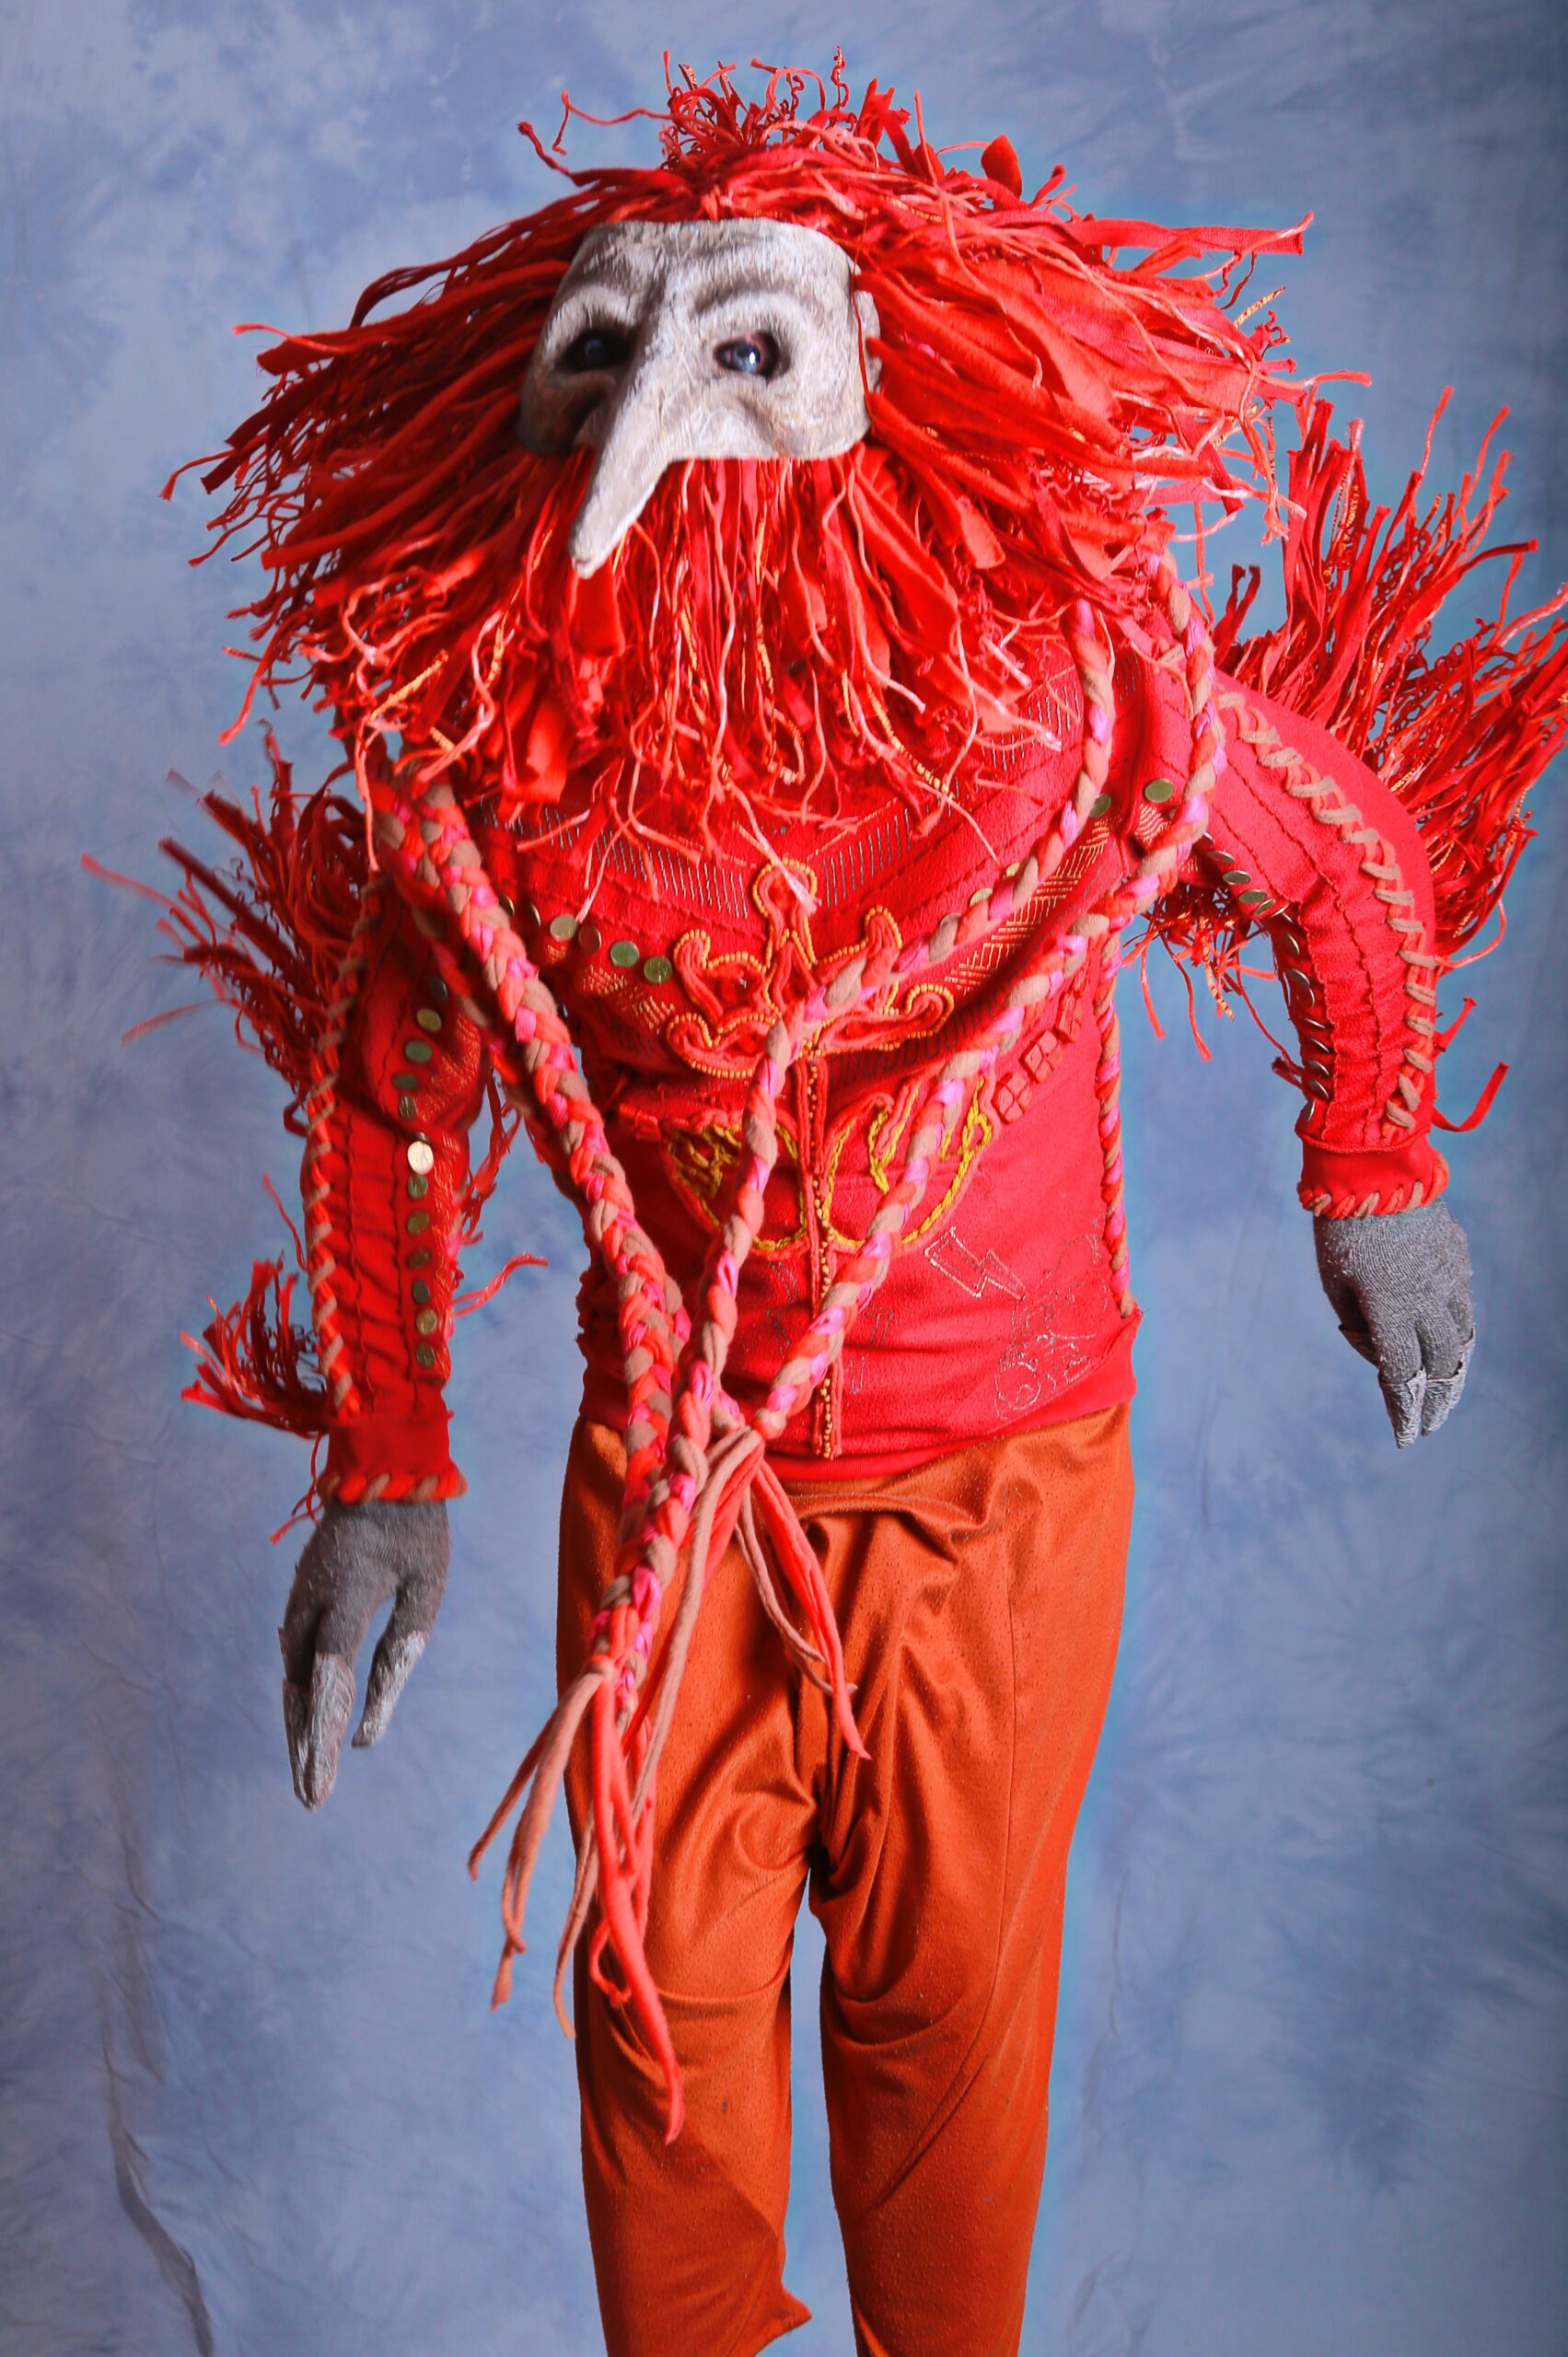 -Shaman in bird mask and redshirt orange pants- by Hrustall photographer on Unsplash